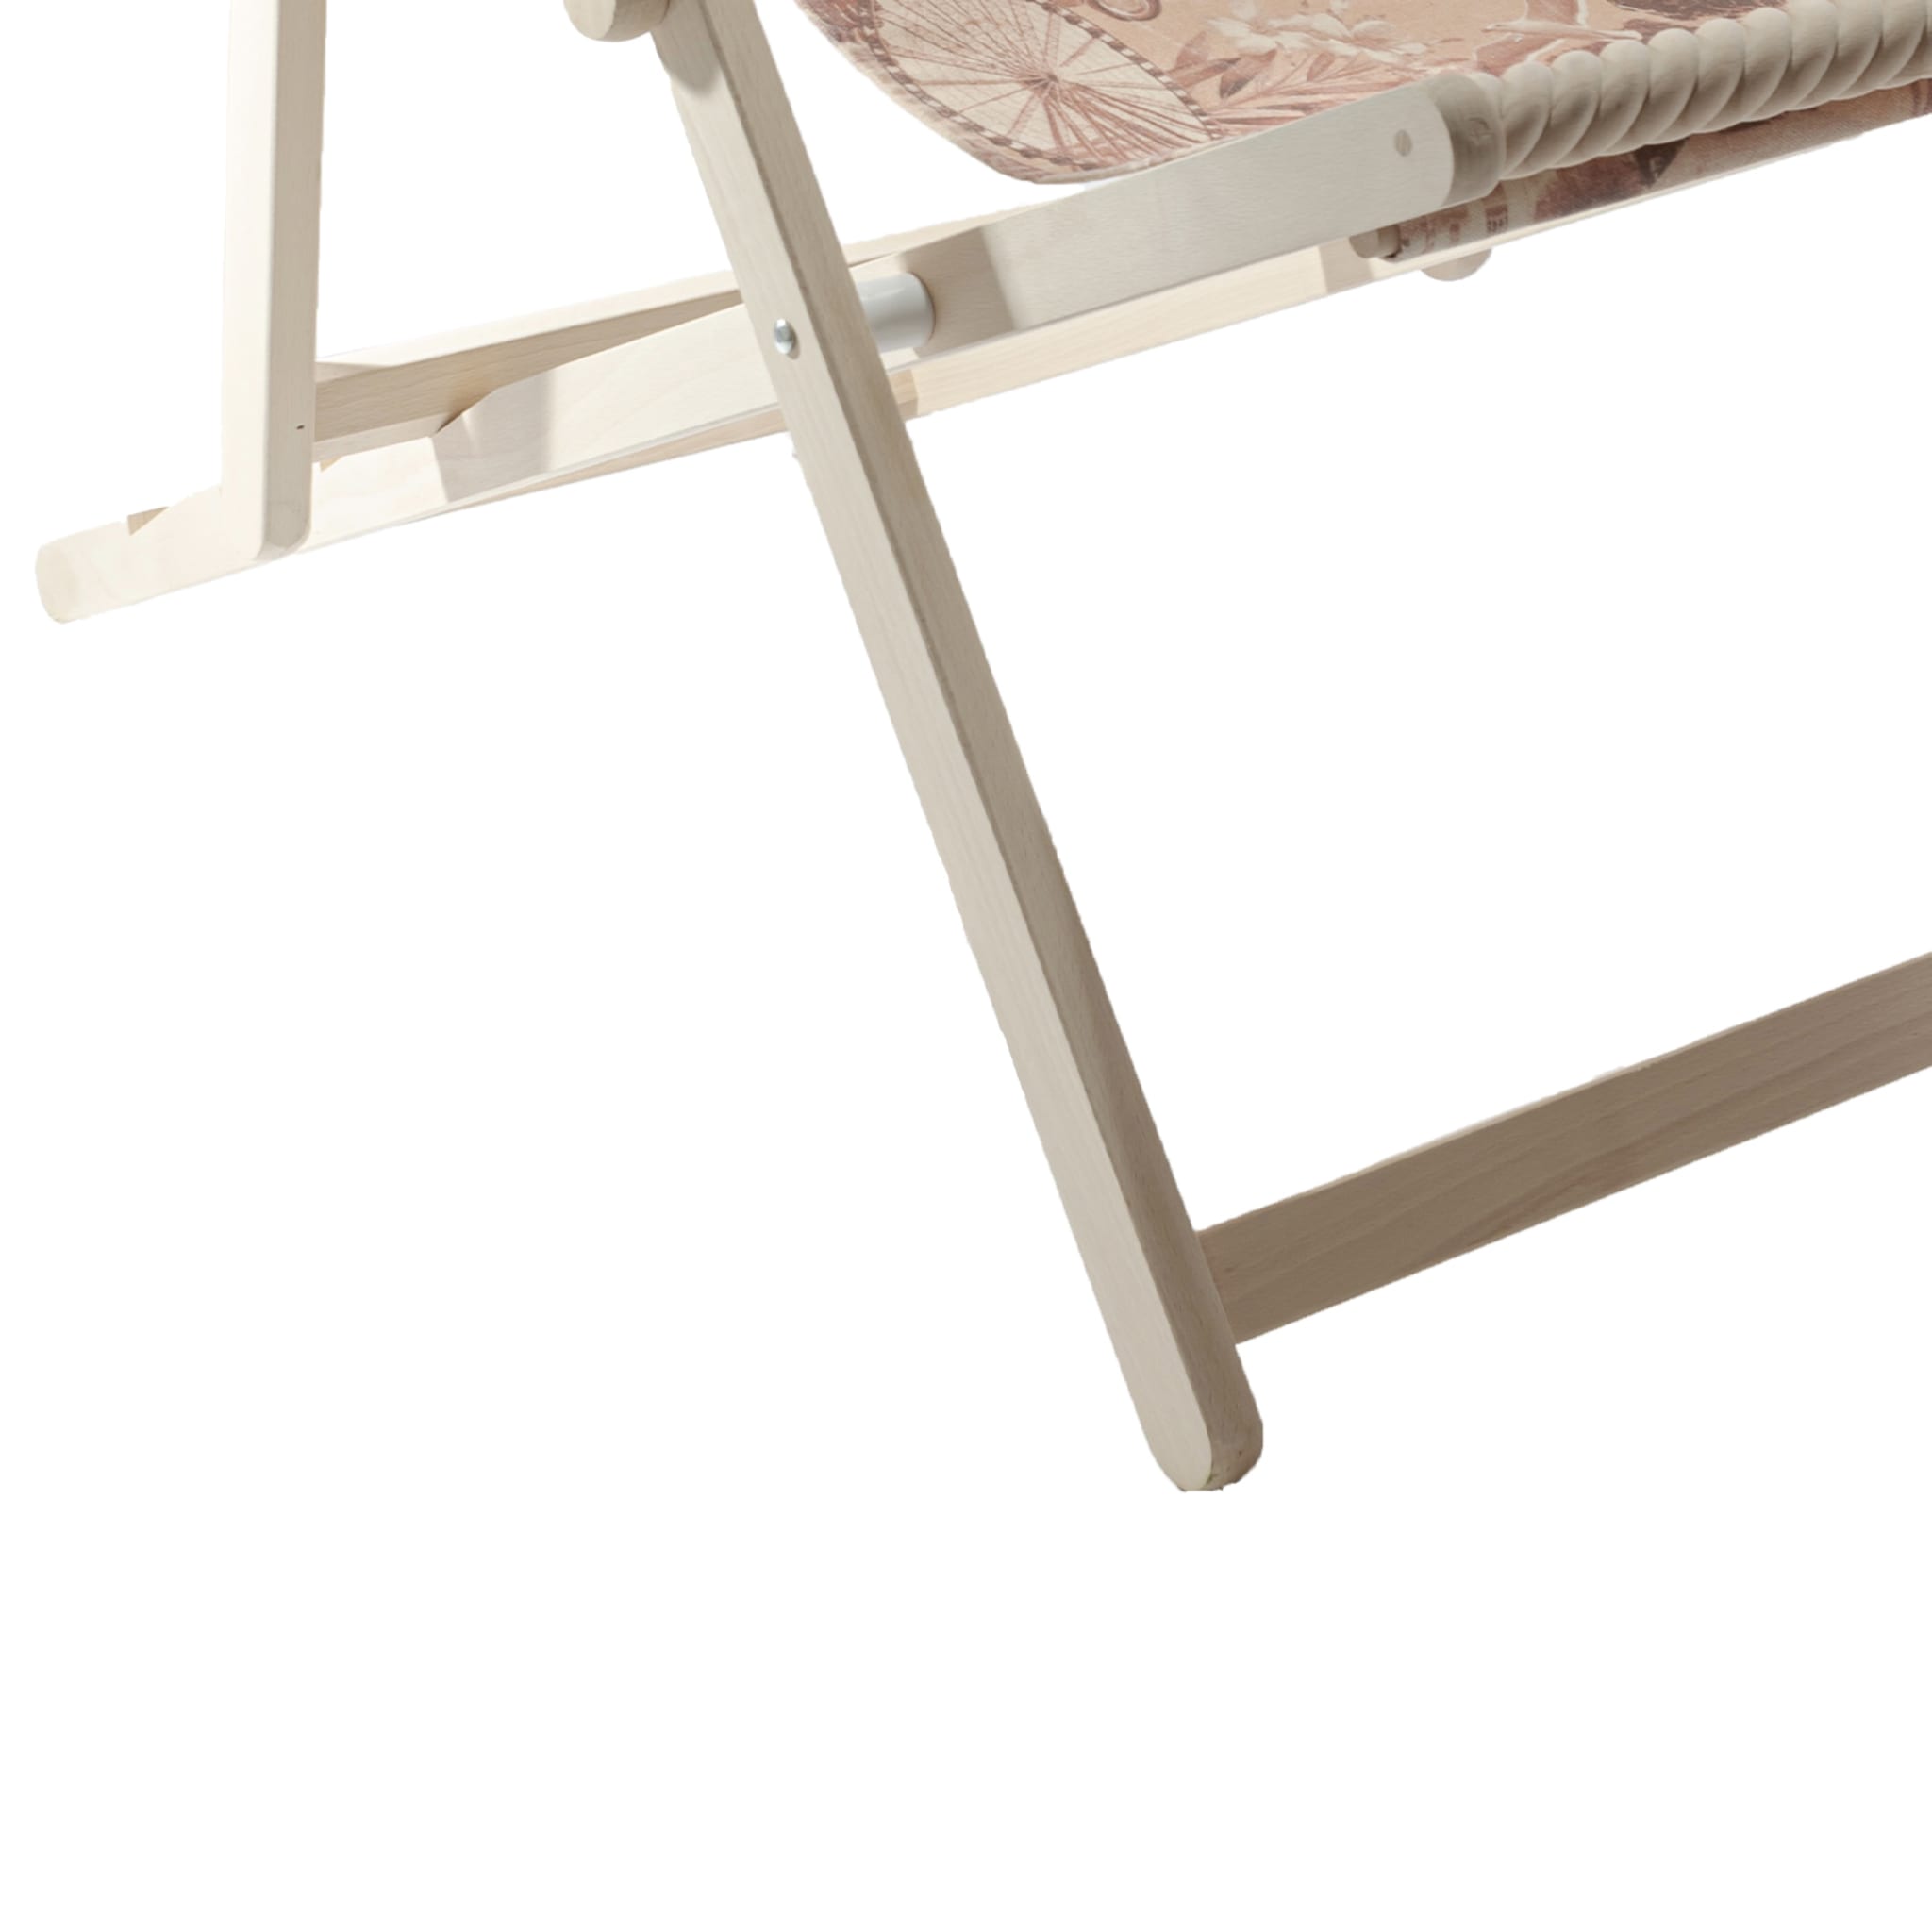 Rimini Deck Chair - Alternative view 2